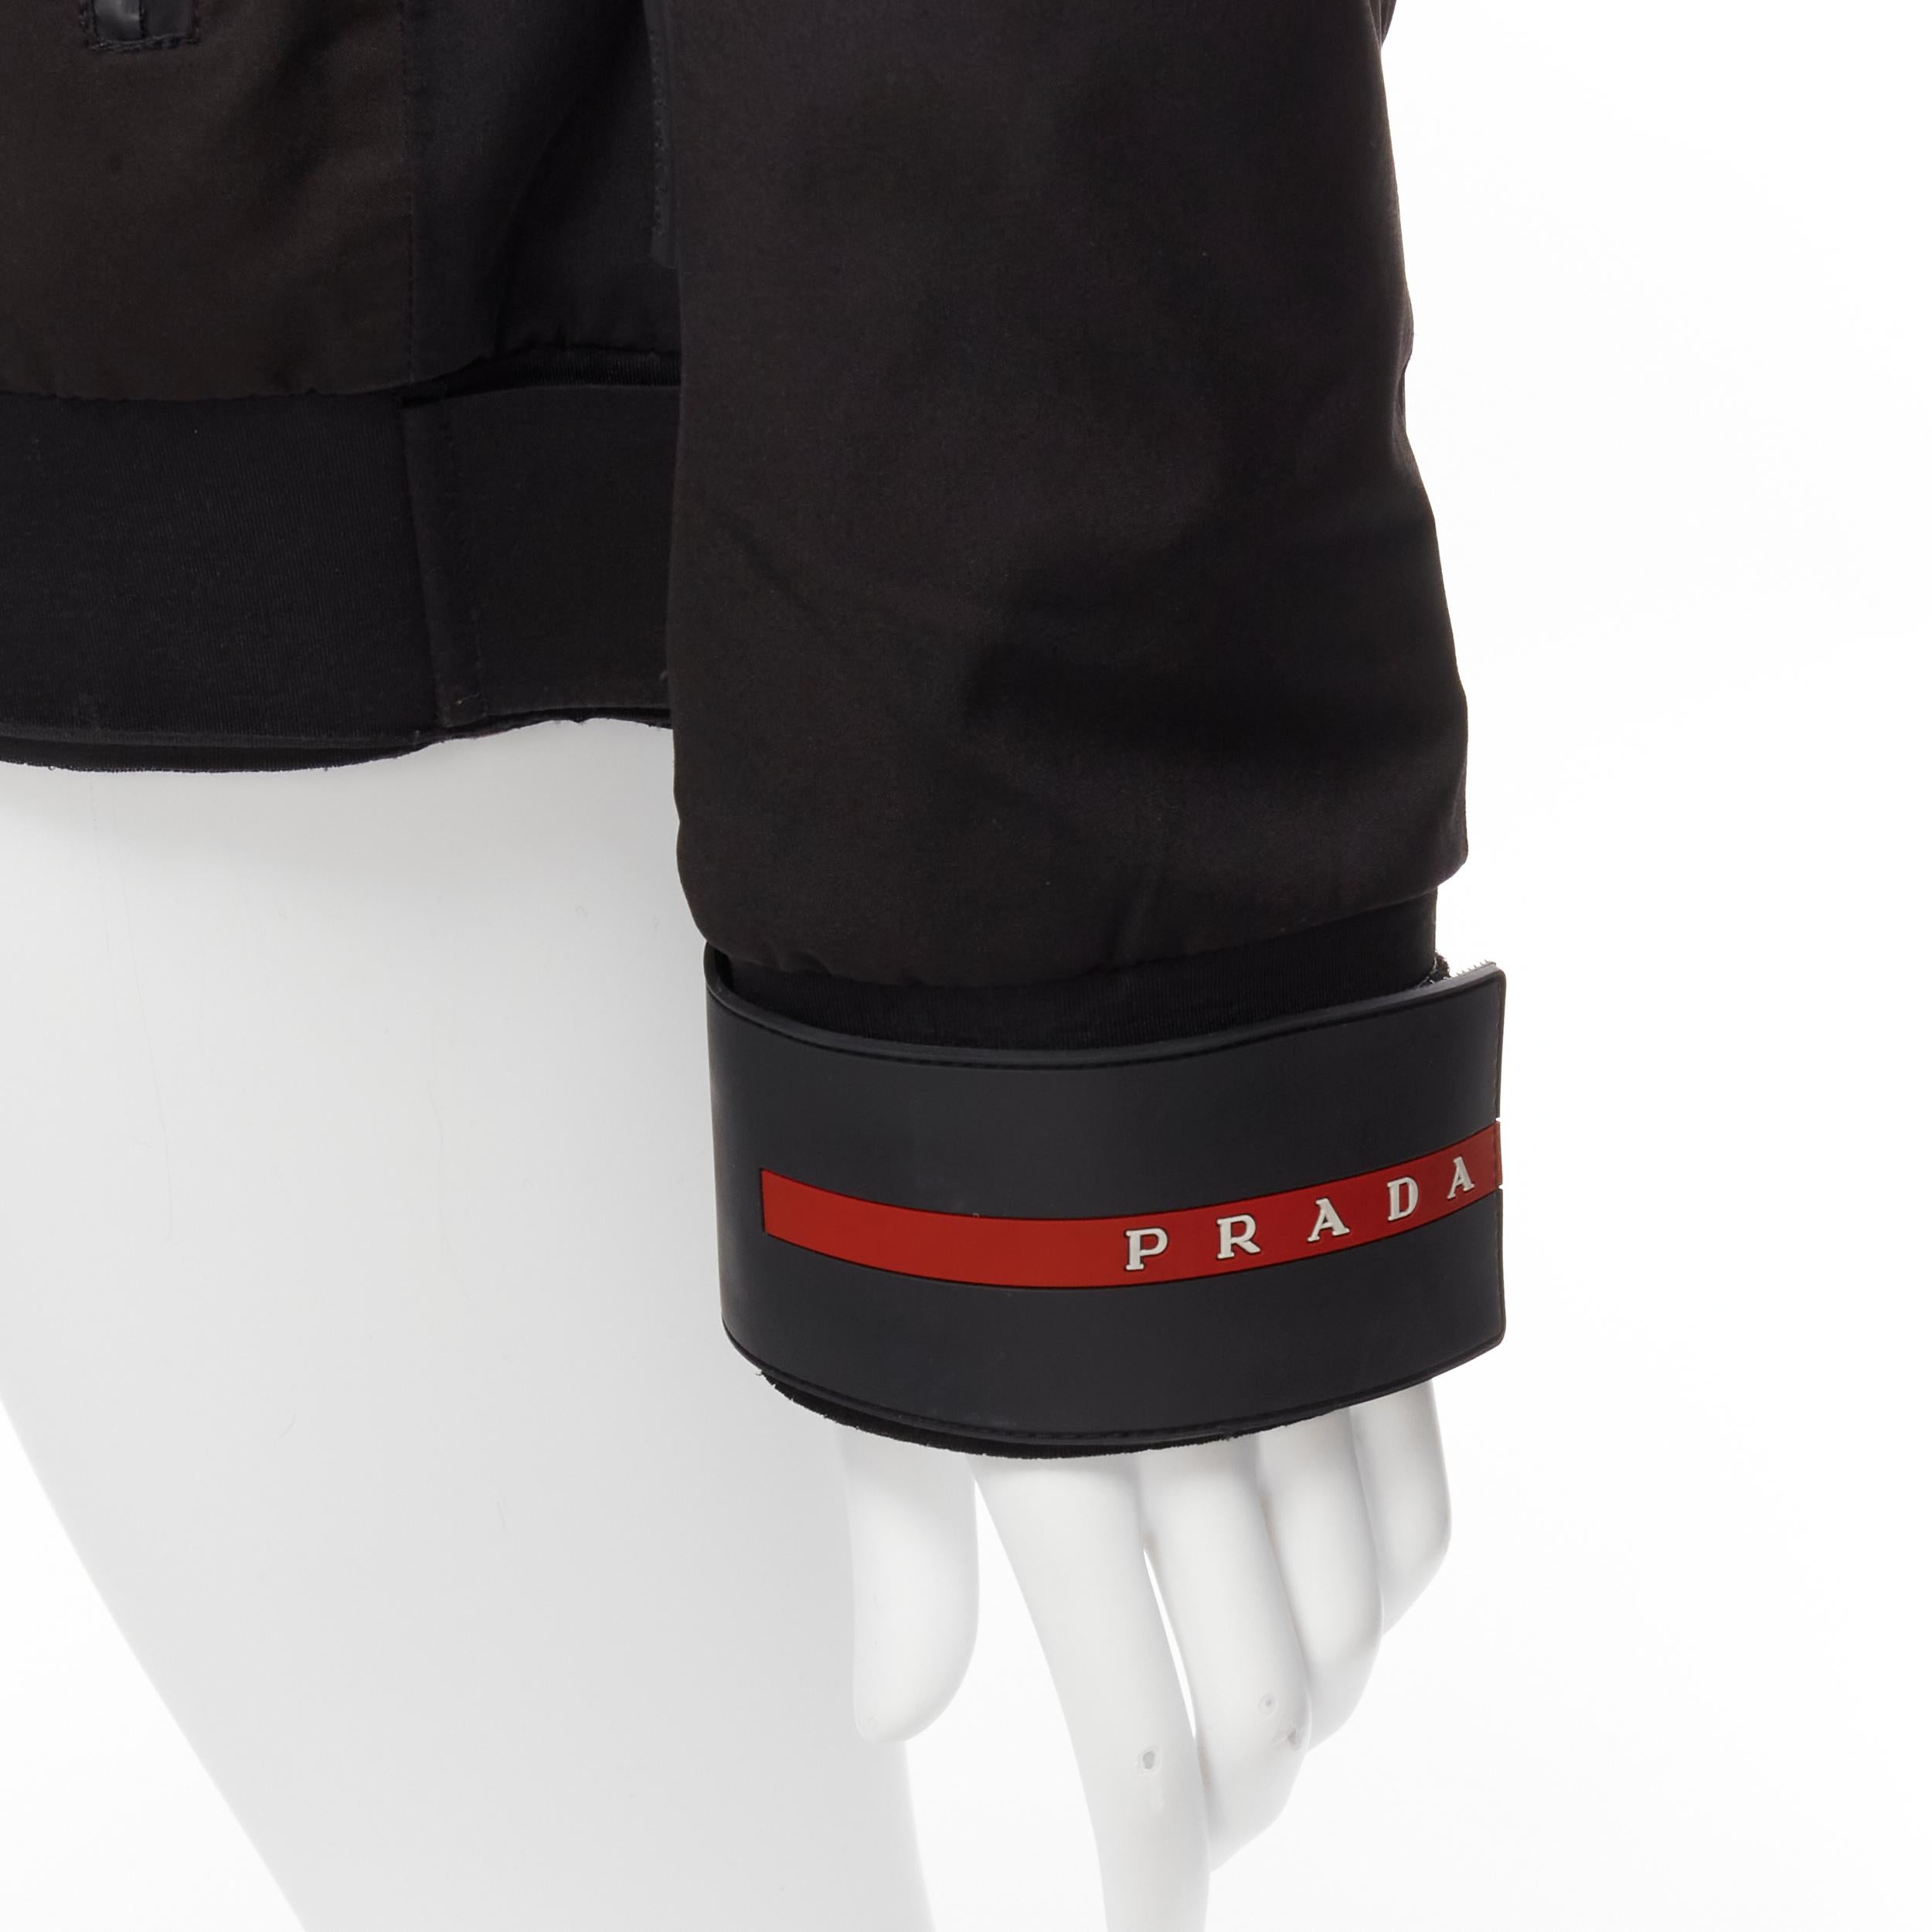 PRADA 2021 Linea Rossa black nylon red logo technical ski jacket M
Reference: TGAS/D00231
Brand: Prada
Designer: Miuccia Prada
Collection: 2021 Linea Rossa
Material: Nylon
Color: Black, Red
Pattern: Solid
Closure: Zip
Lining: Black Fabric
Extra